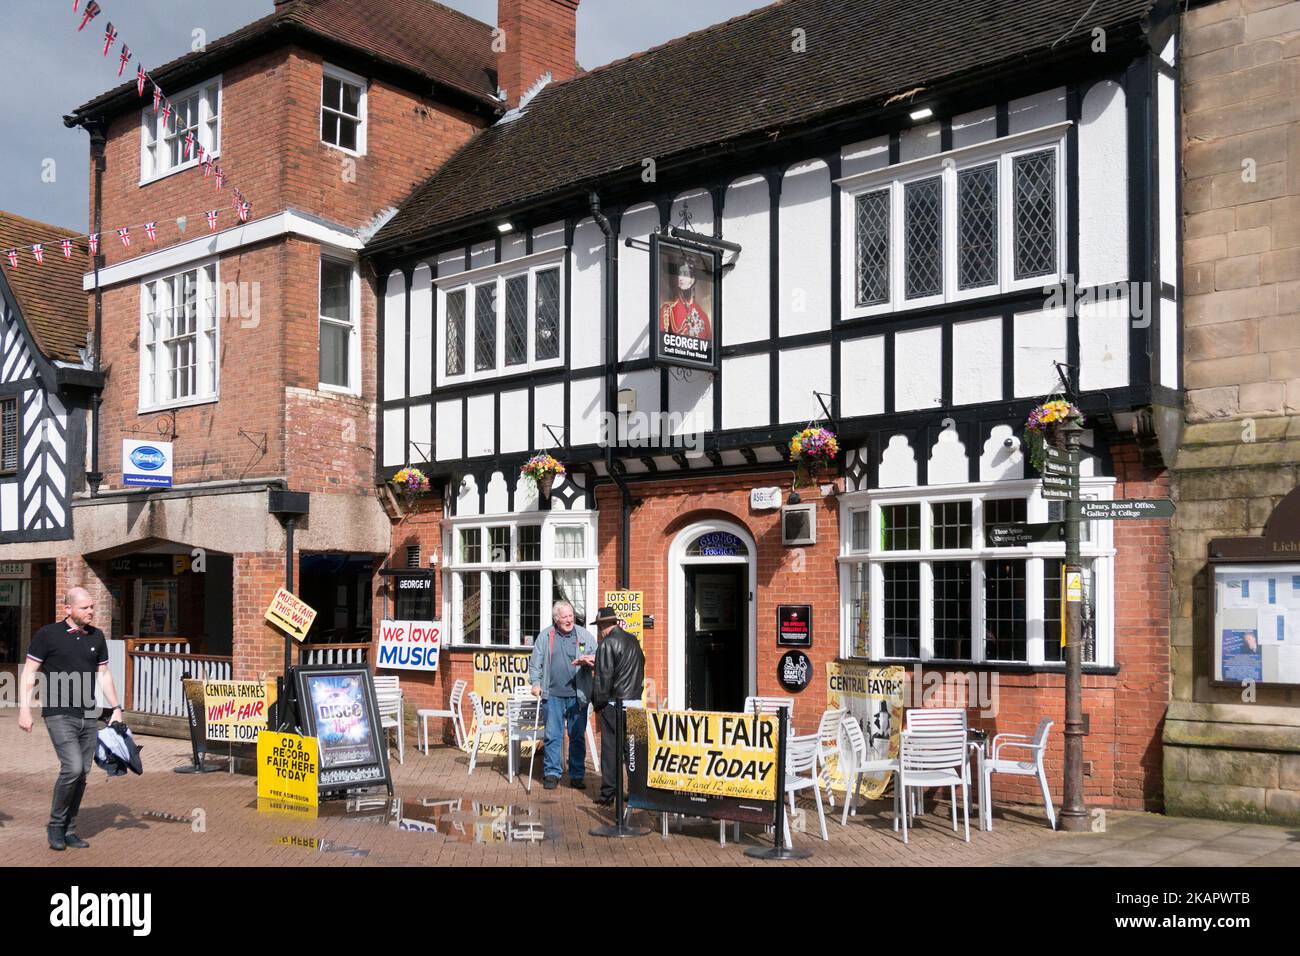 George IV pub en la calle Bore Street con señales para la feria de vinilo, Lichfield, Staffordshire Foto de stock